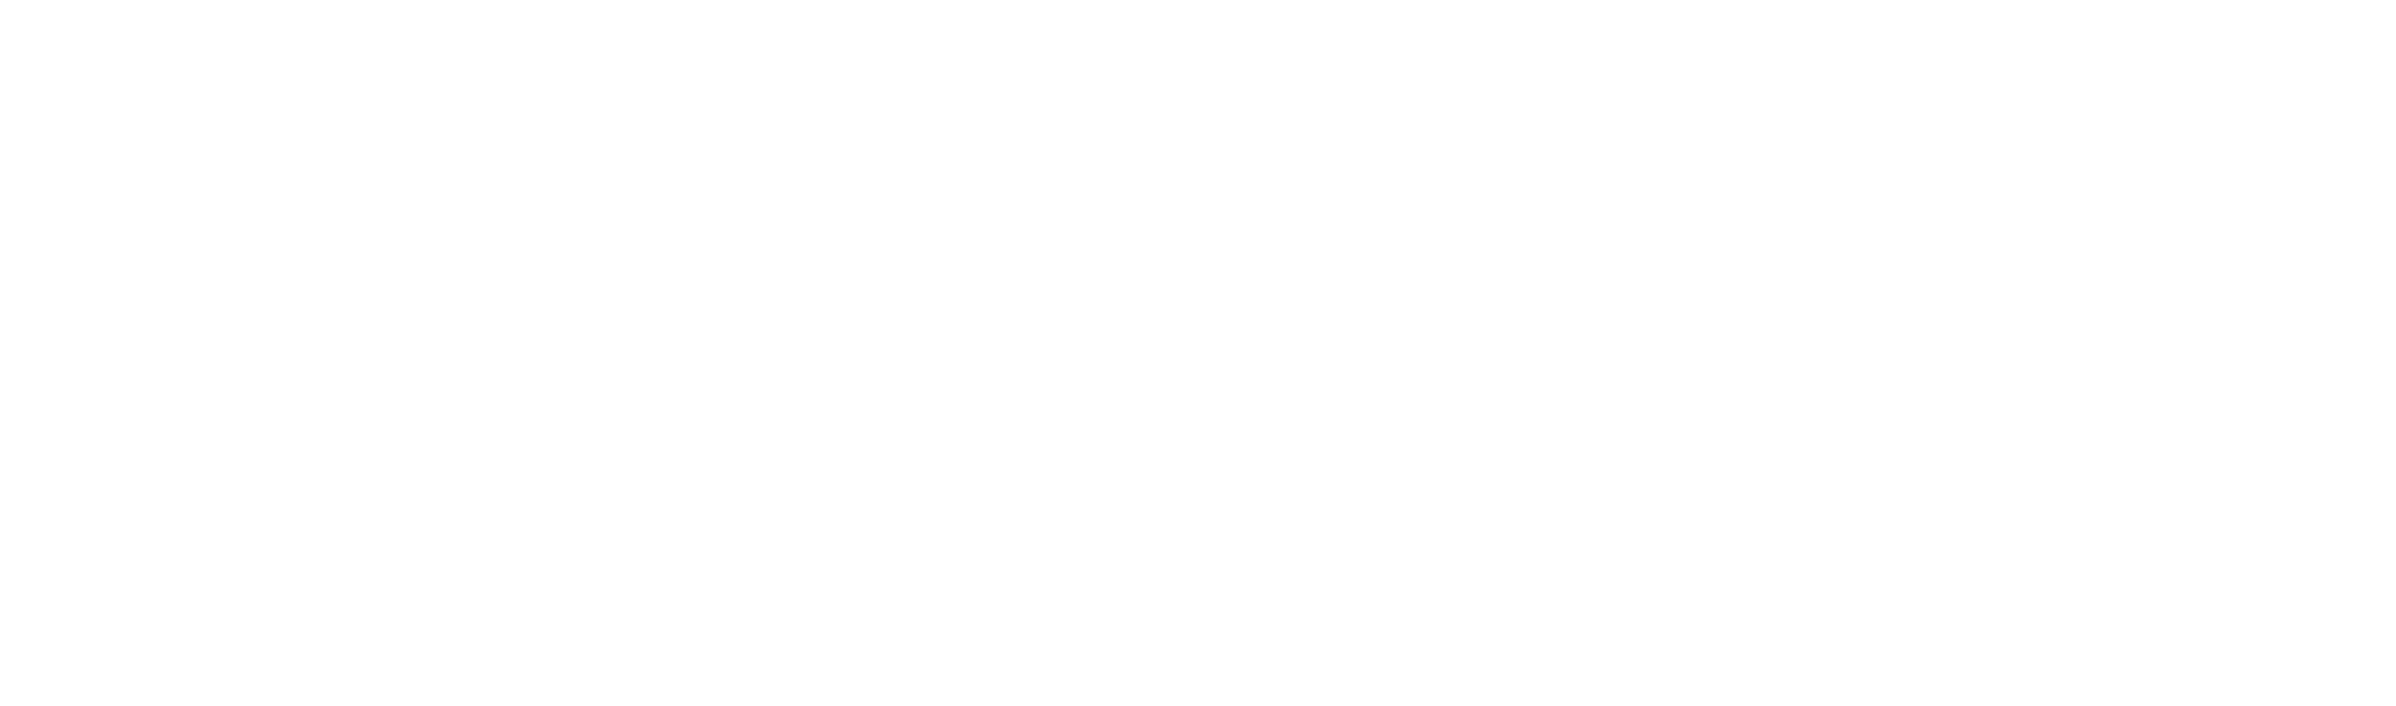 the pixel method